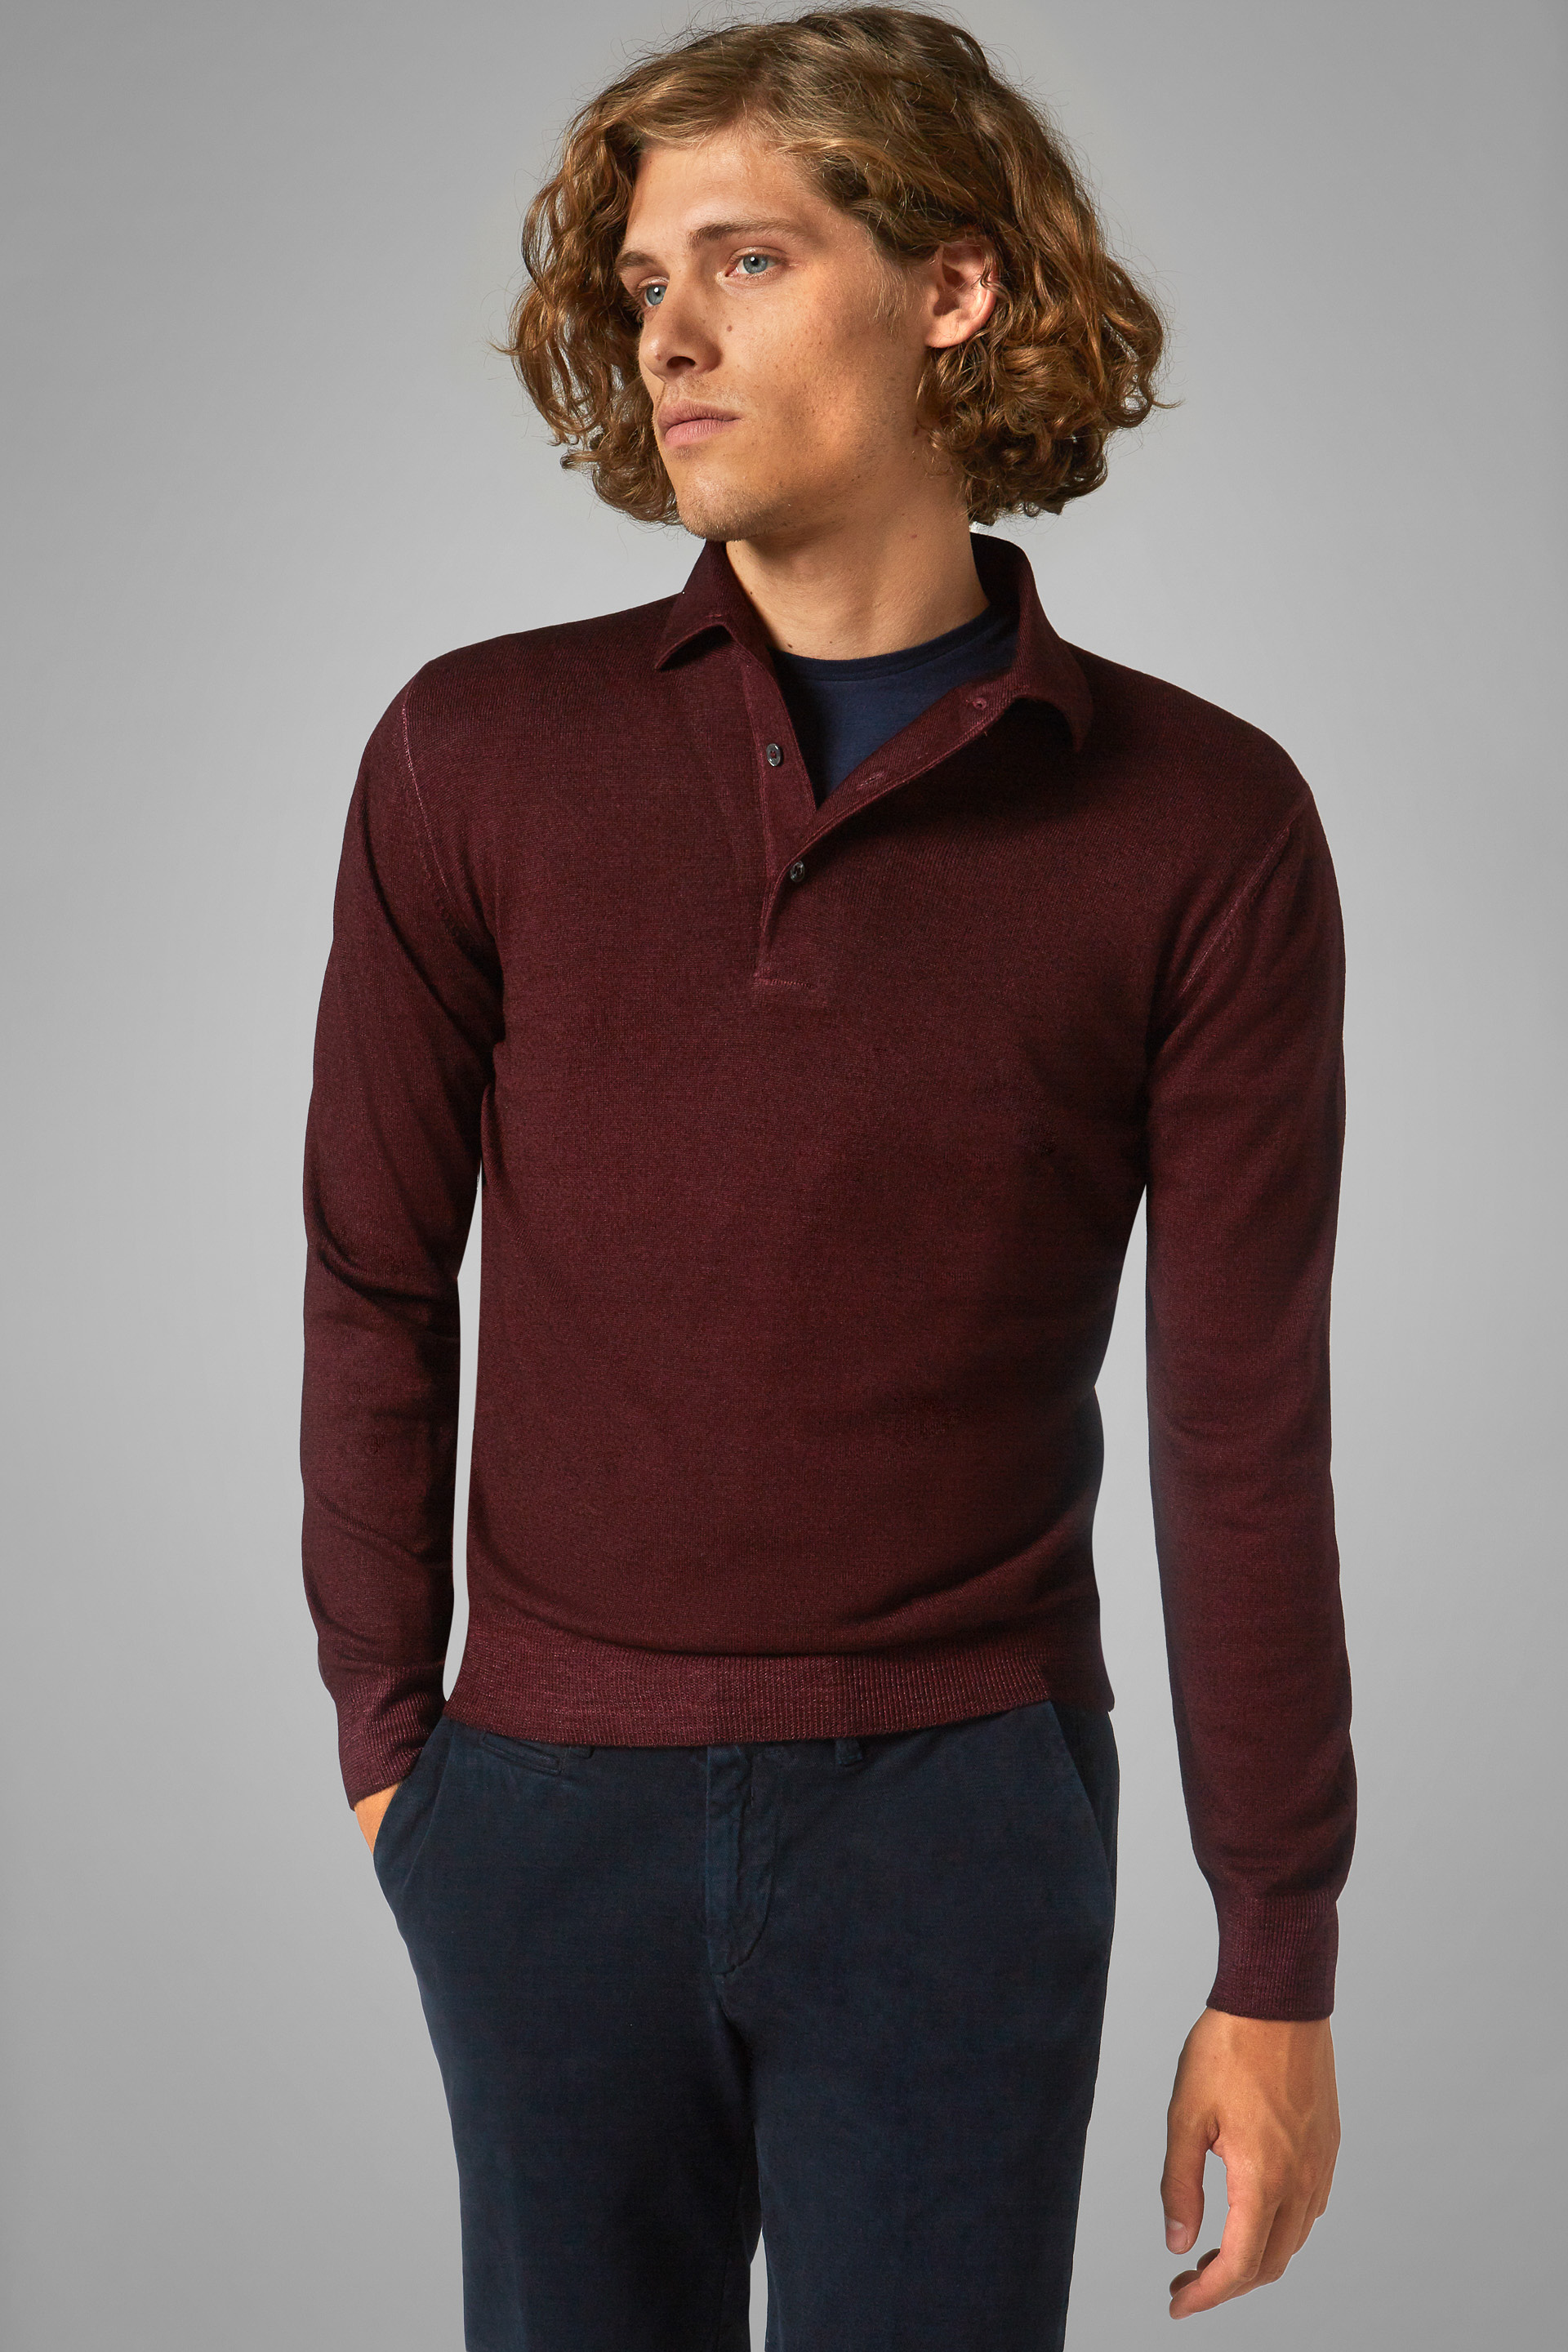 Buy > merino wool polo shirt > in stock